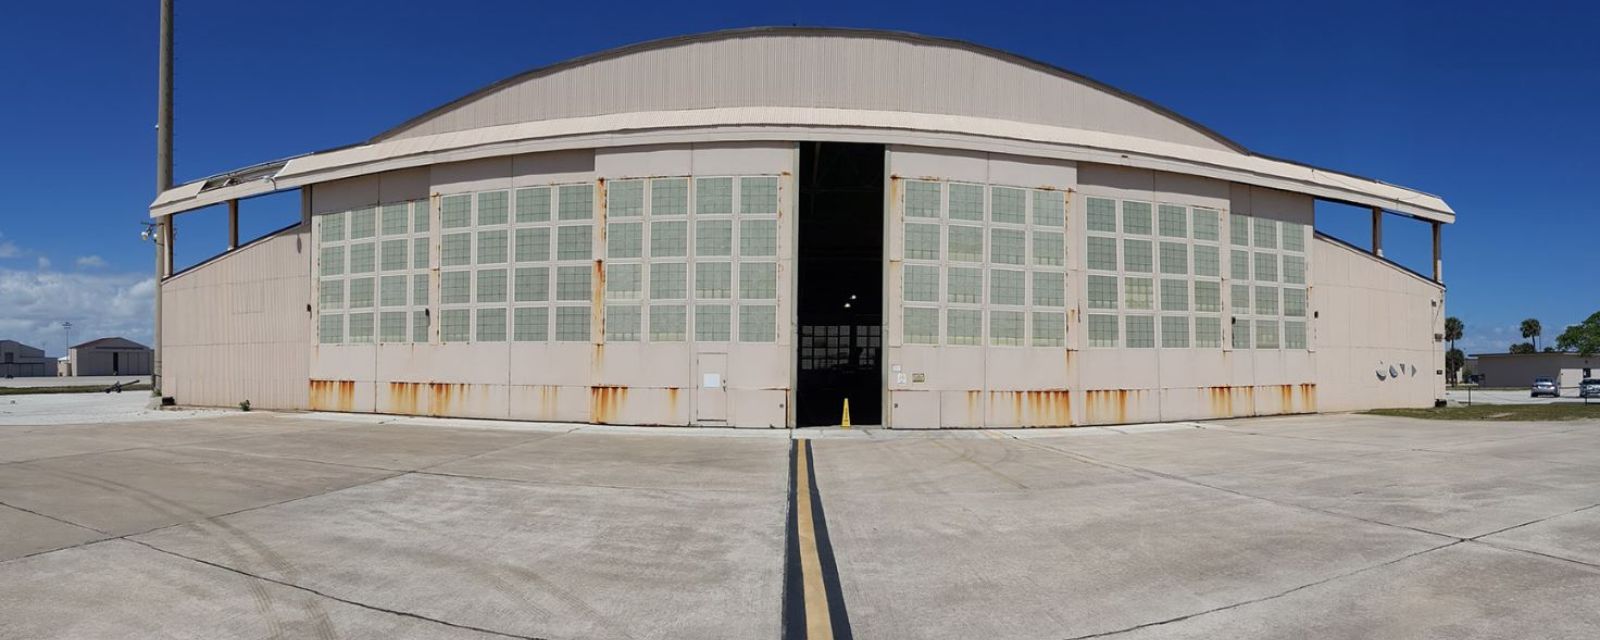 Exterior of HH60 maintenance hangar at Patrick Space Force Base.